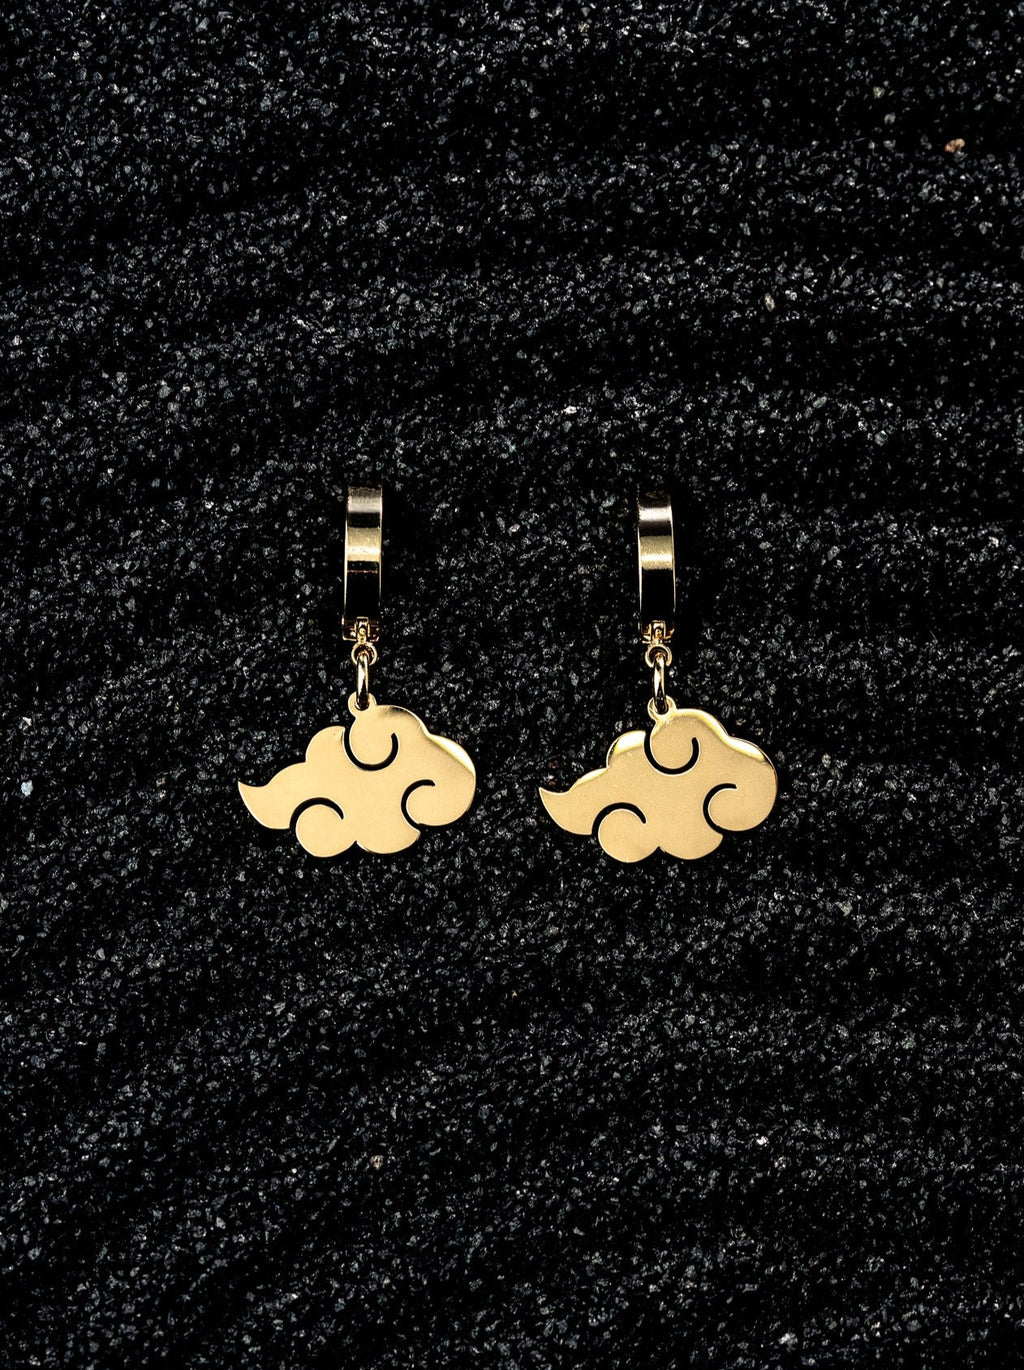 Naruto Akatsuki cloud earrings pendant